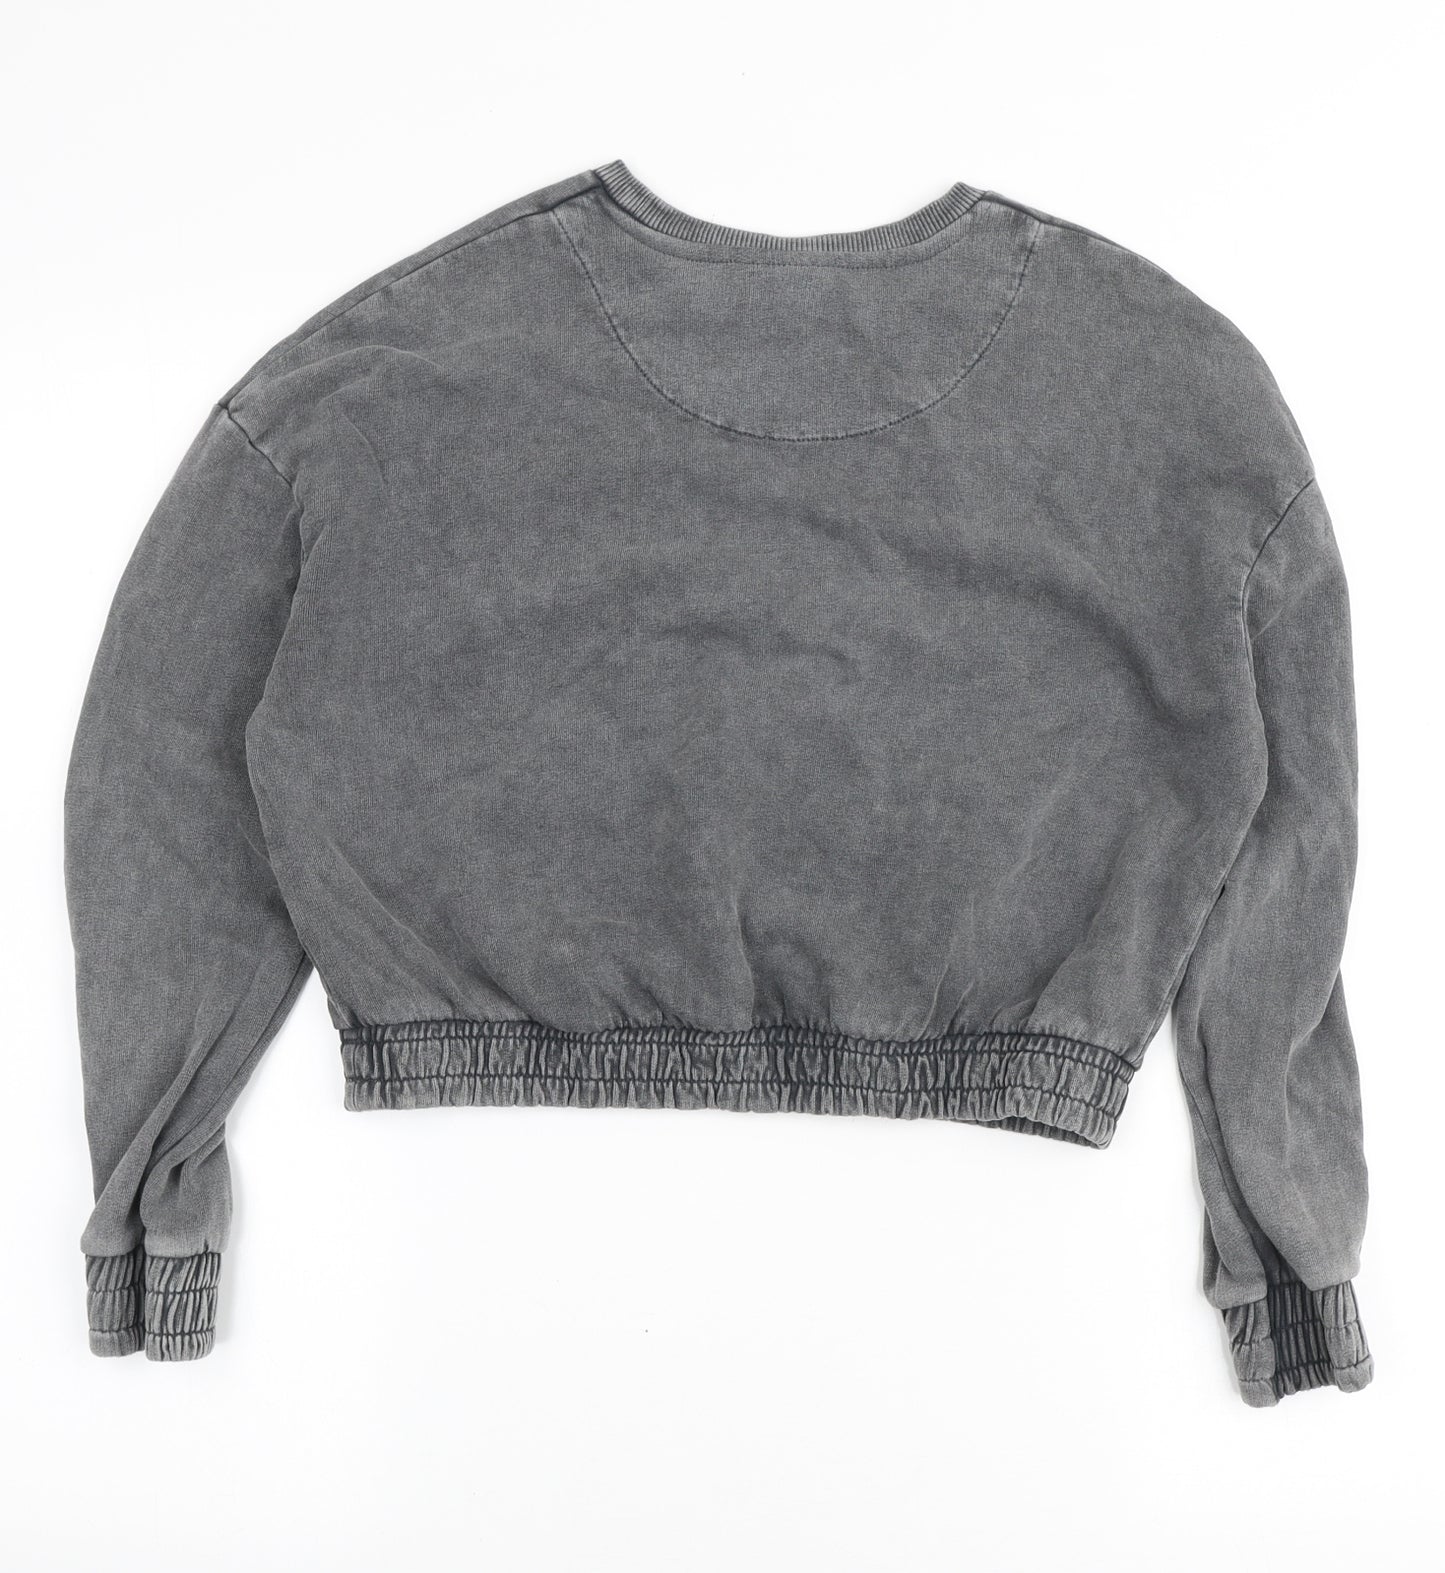 Holyfield Girls Grey Cotton Pullover Sweatshirt Size 8-9 Years Pullover